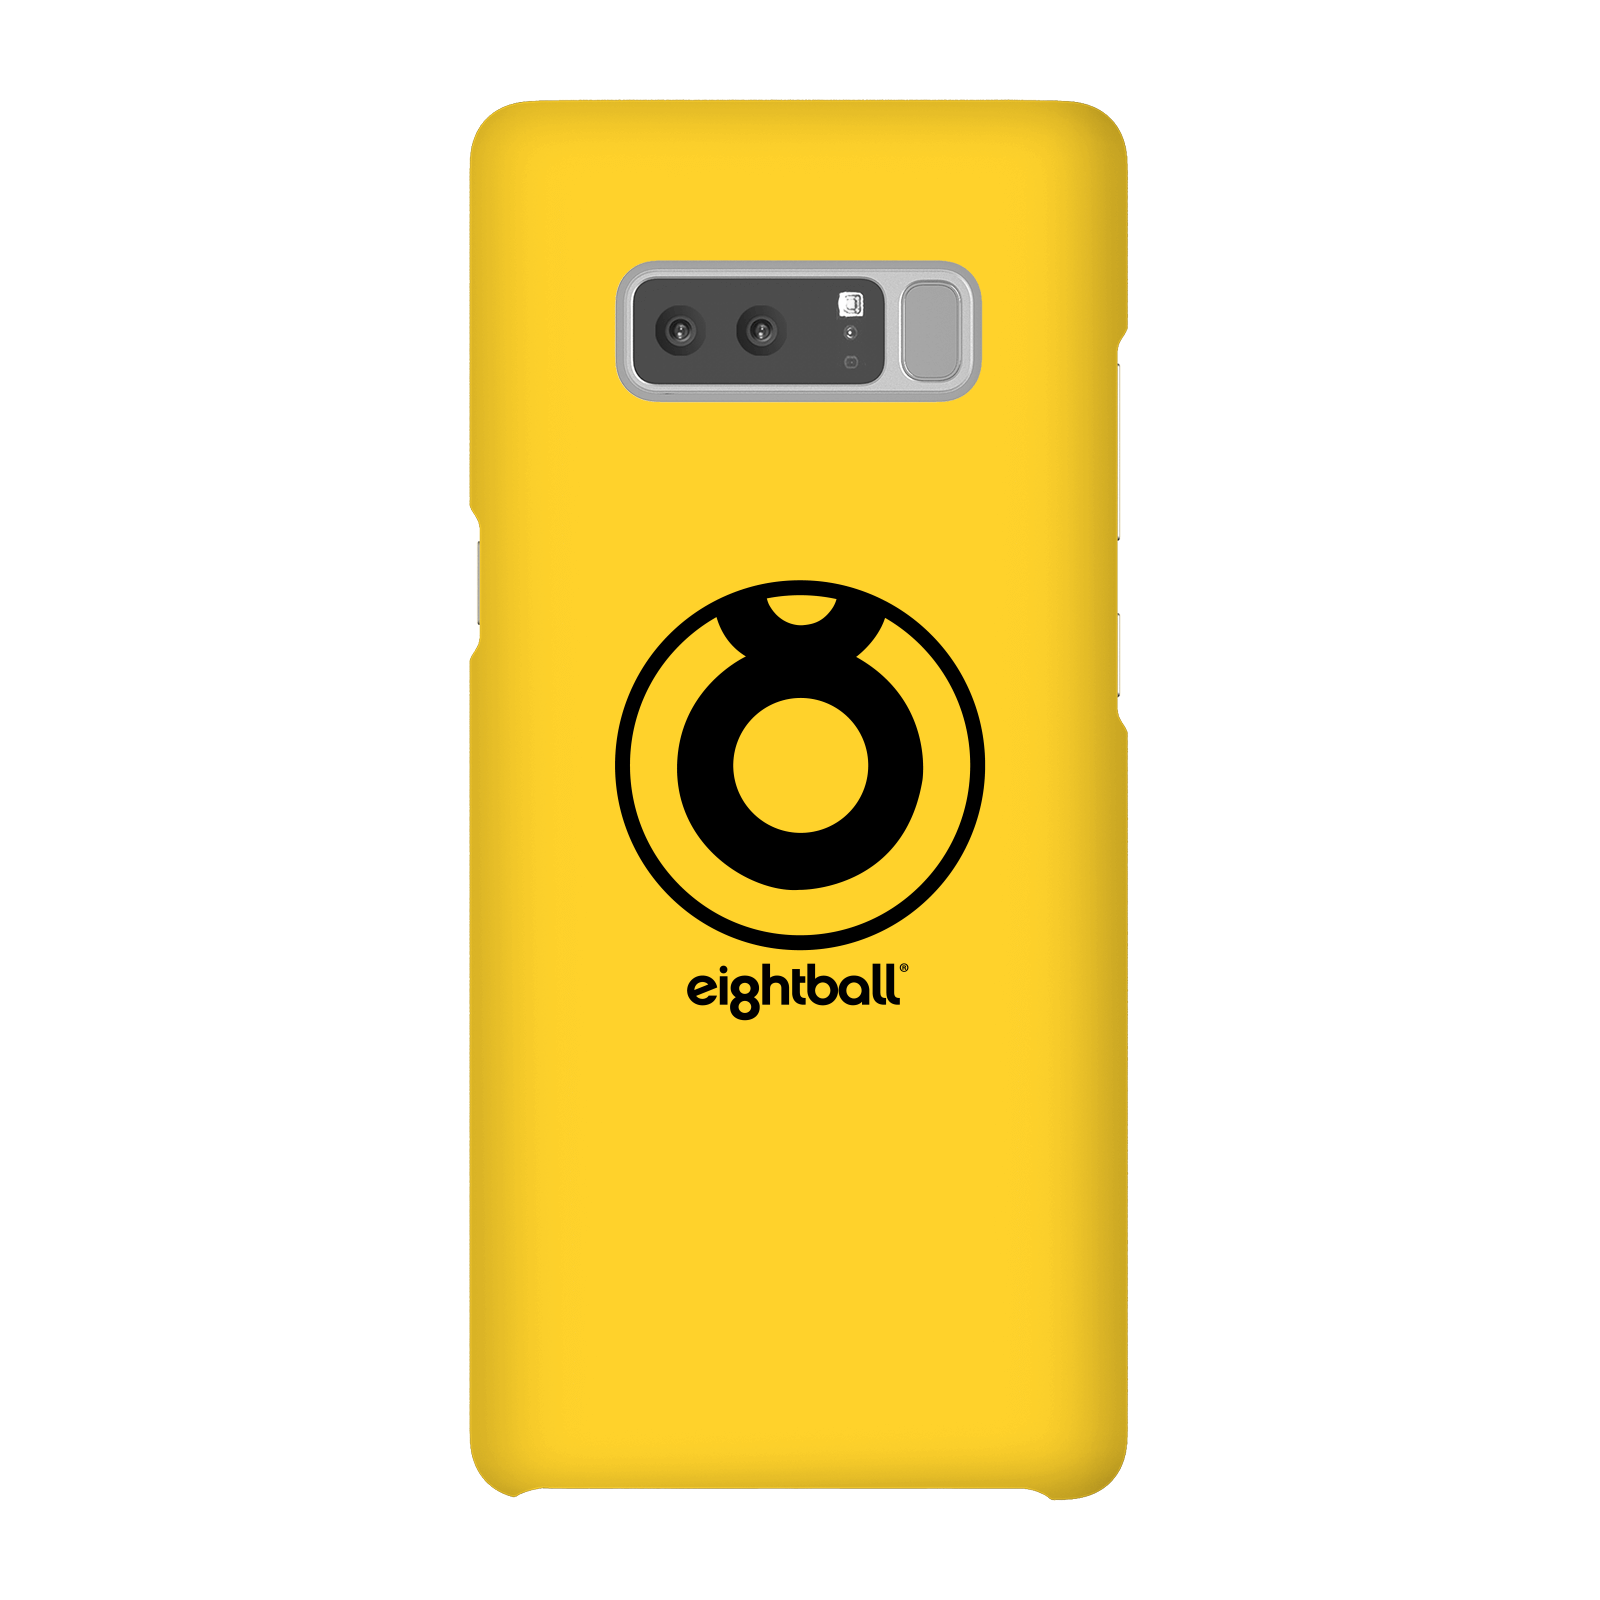 Funda Móvil Ei8htball Large Circle Logo para iPhone y Android - Samsung Note 8 - Carcasa rígida - Brillante